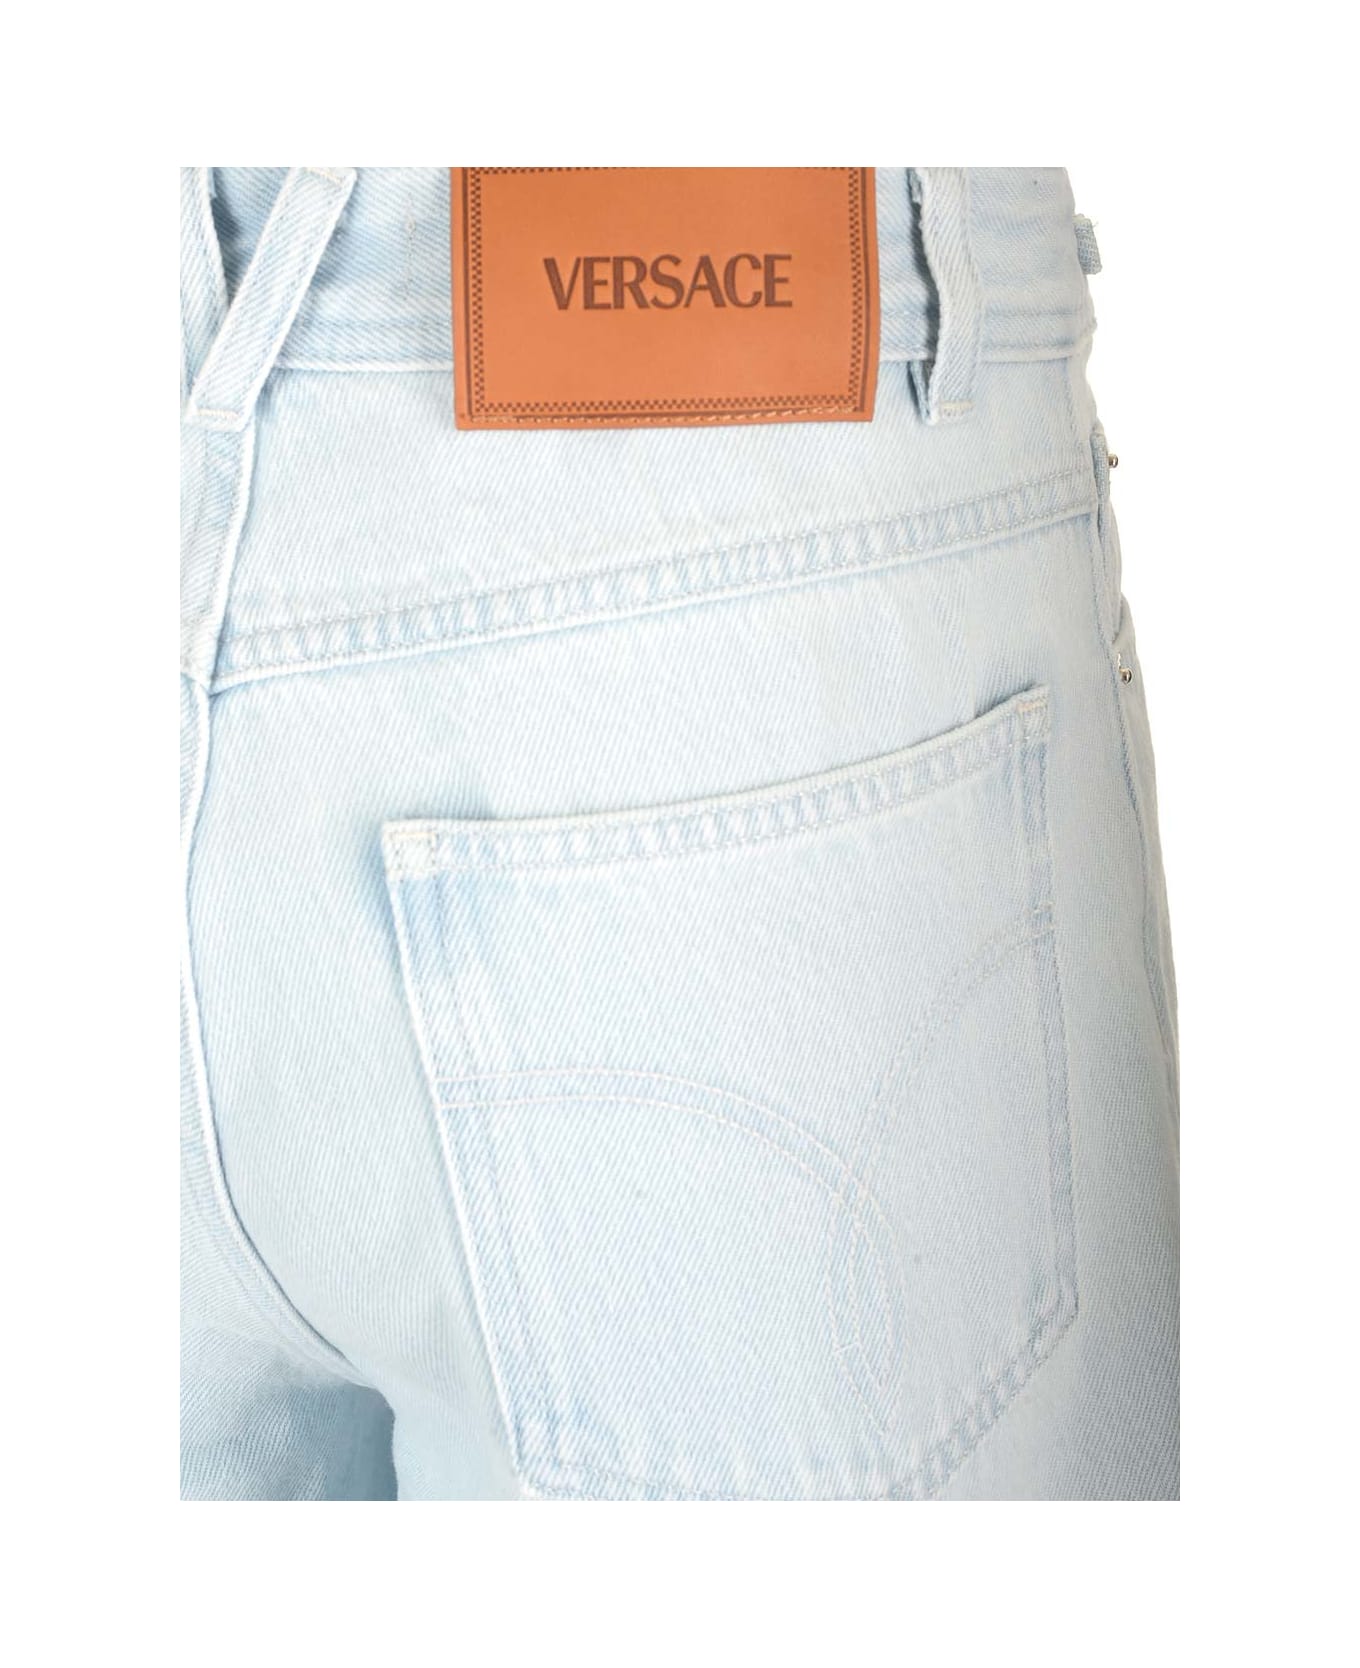 Versace Wide-leg Jeans - Light blue デニム